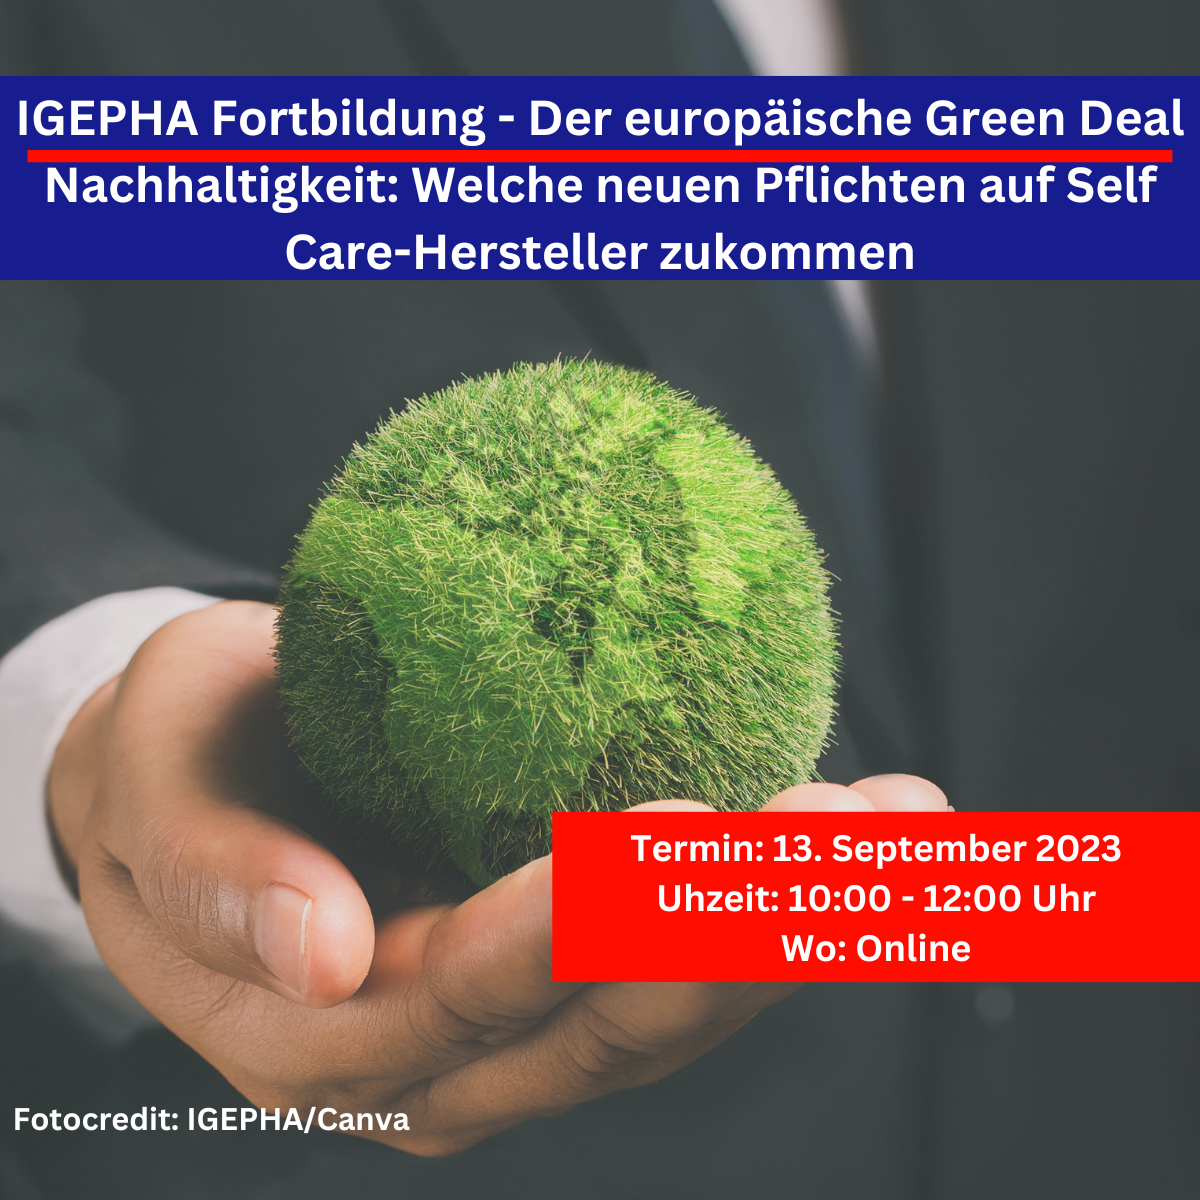 IGEPHA Fortbildung Der europäische Green Deal